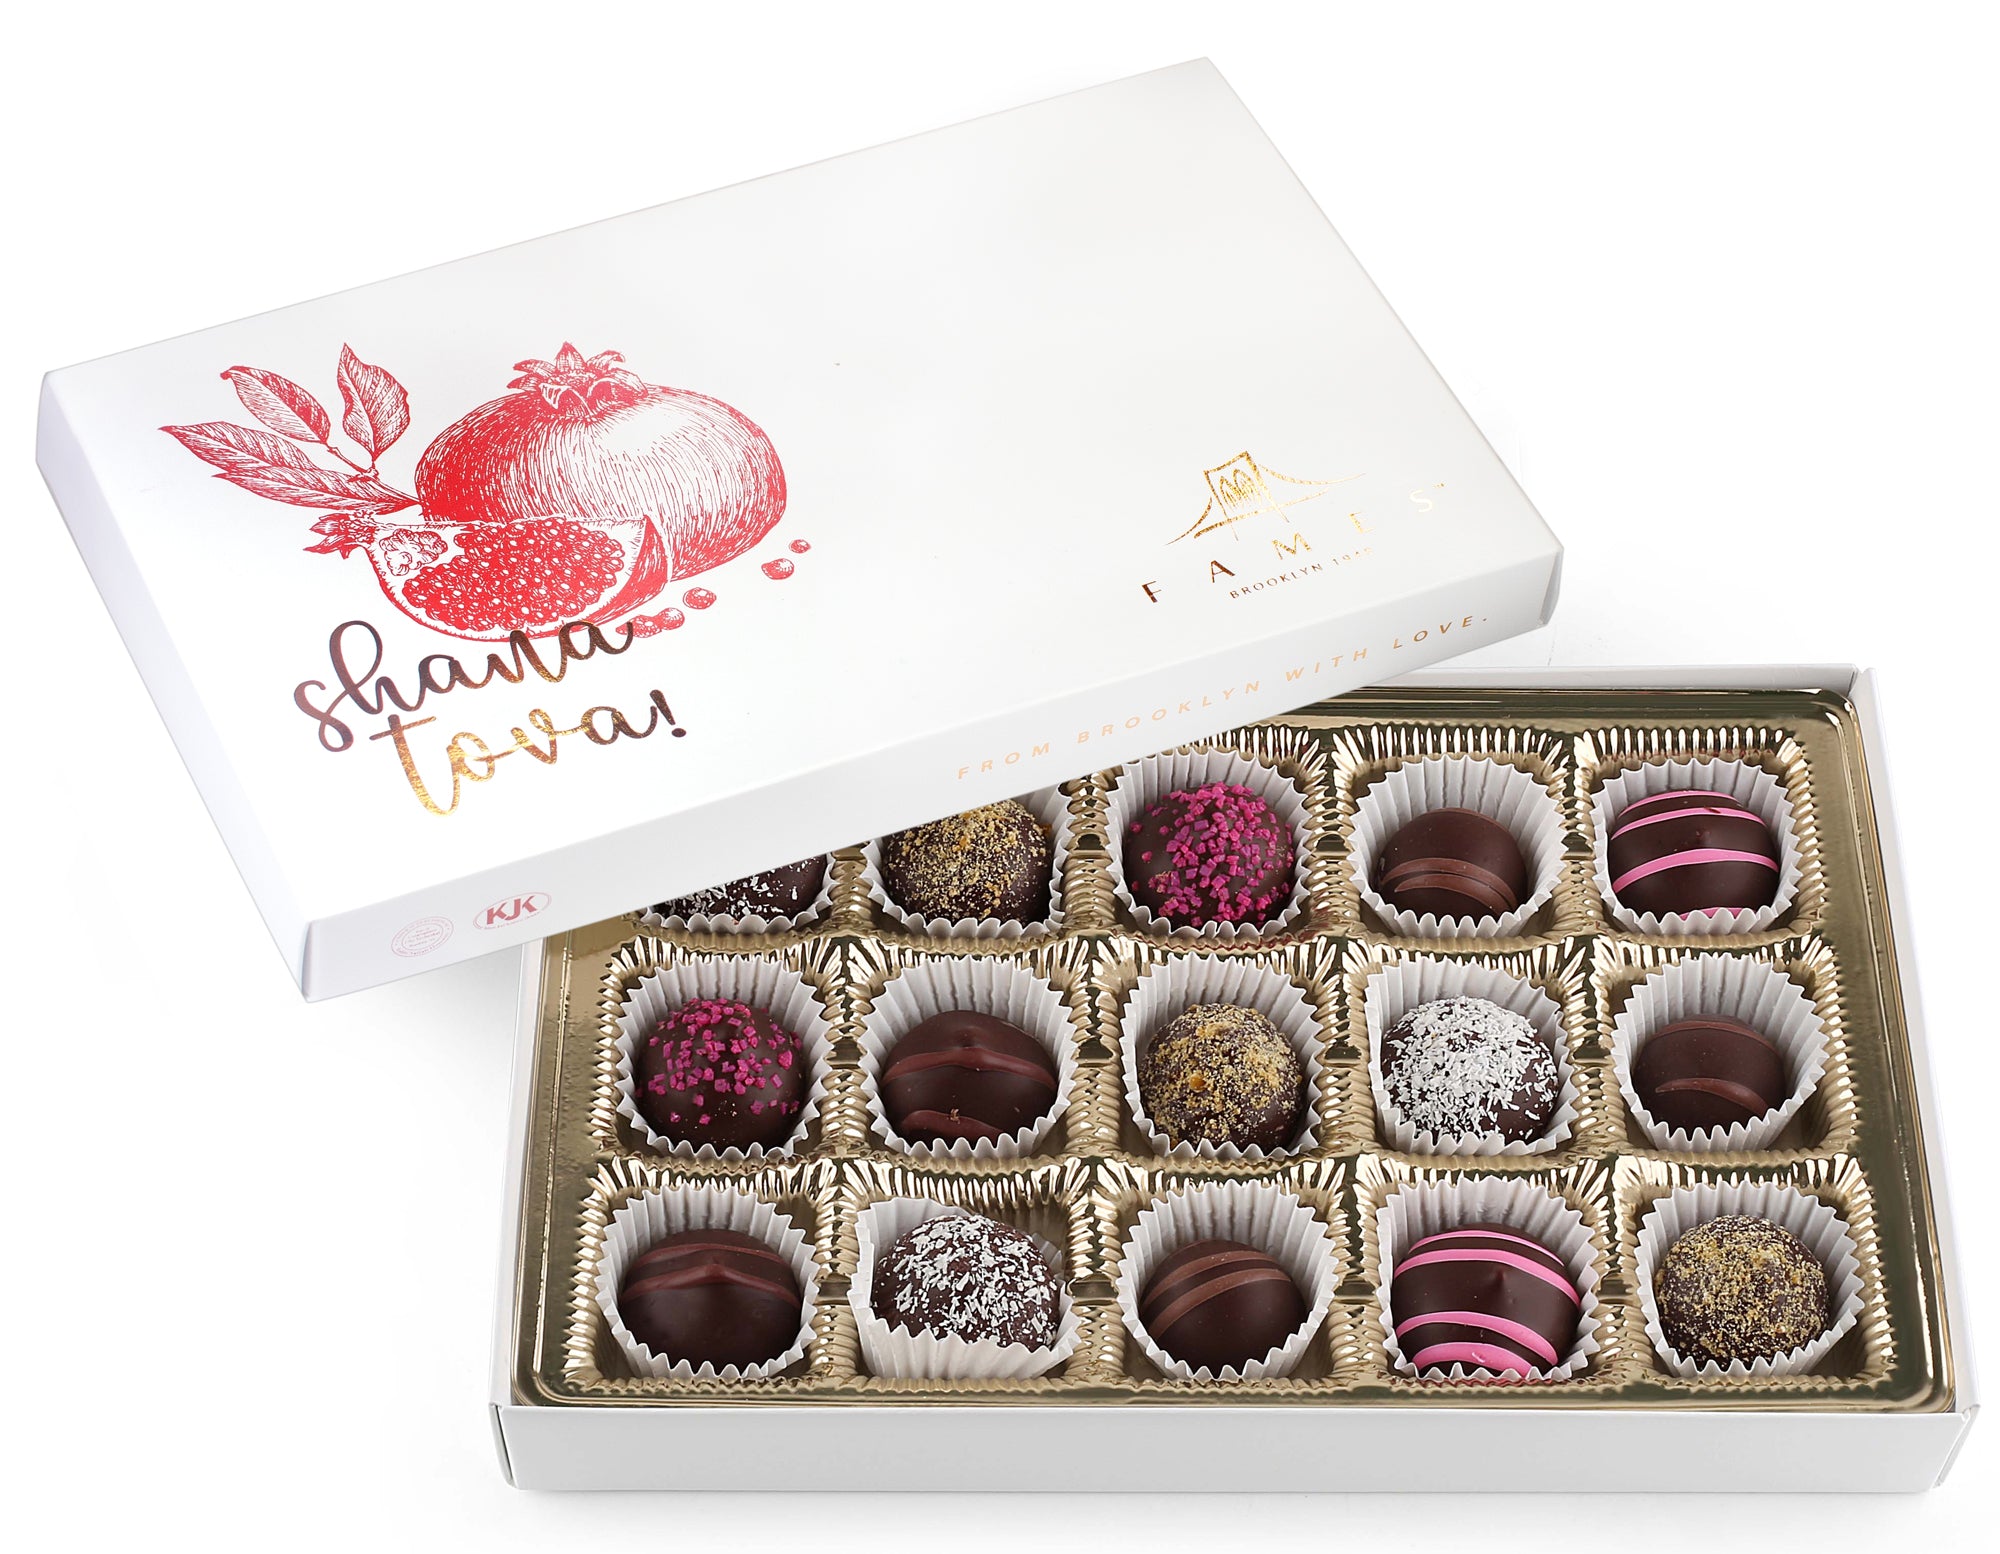 Shana Tova Chocolate Gift Box - 15 Pc. Kosher Pareve.  Fames Chocolate   